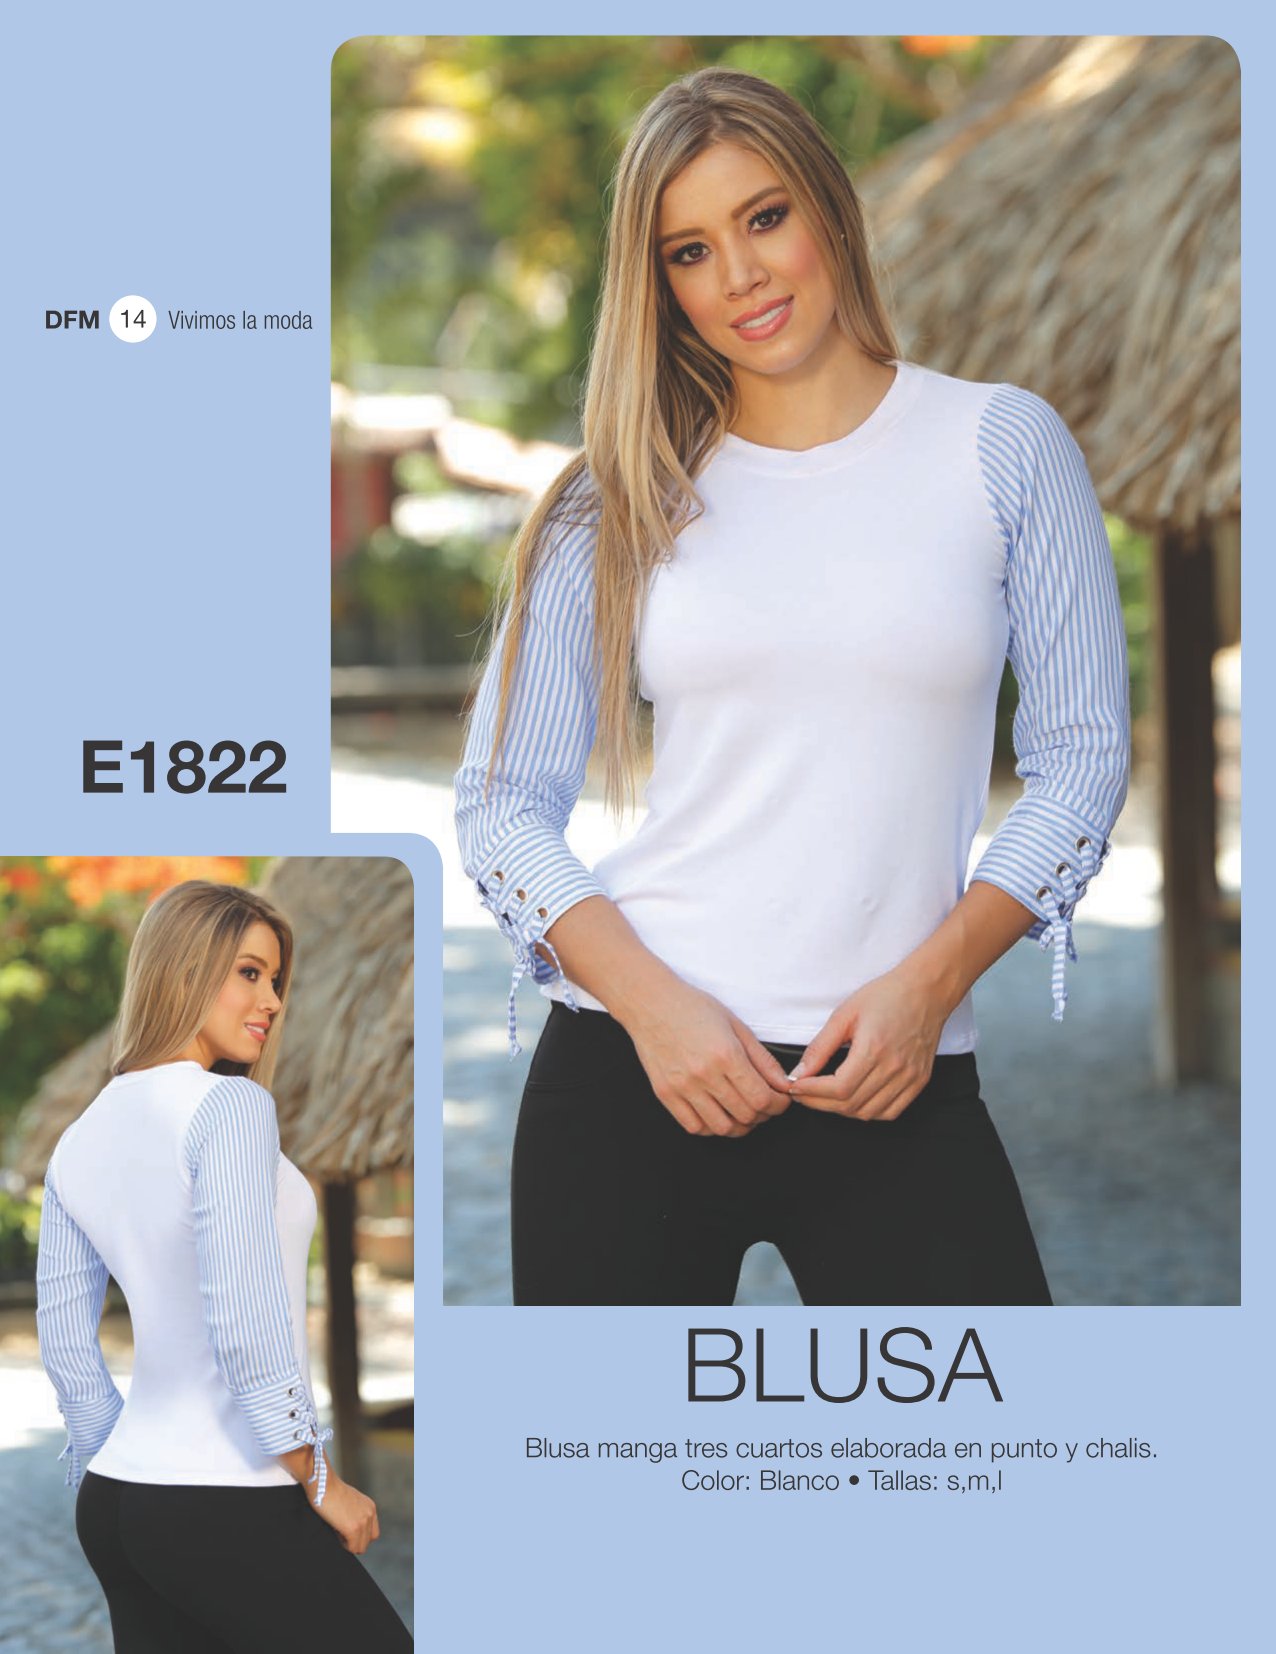 DFans on Twitter: "NUEVO E1822 - BLUSA MANGA TRES CUARTOS ELABORADA EN PUNTO Y CHALIS Color blanco Tallas S-M-L Síquenos en https://t.co/BGH2n2eclB #moda #jeans #blusas #catalogo #vestidos https://t.co/hC3ysy7ZJ4" / Twitter